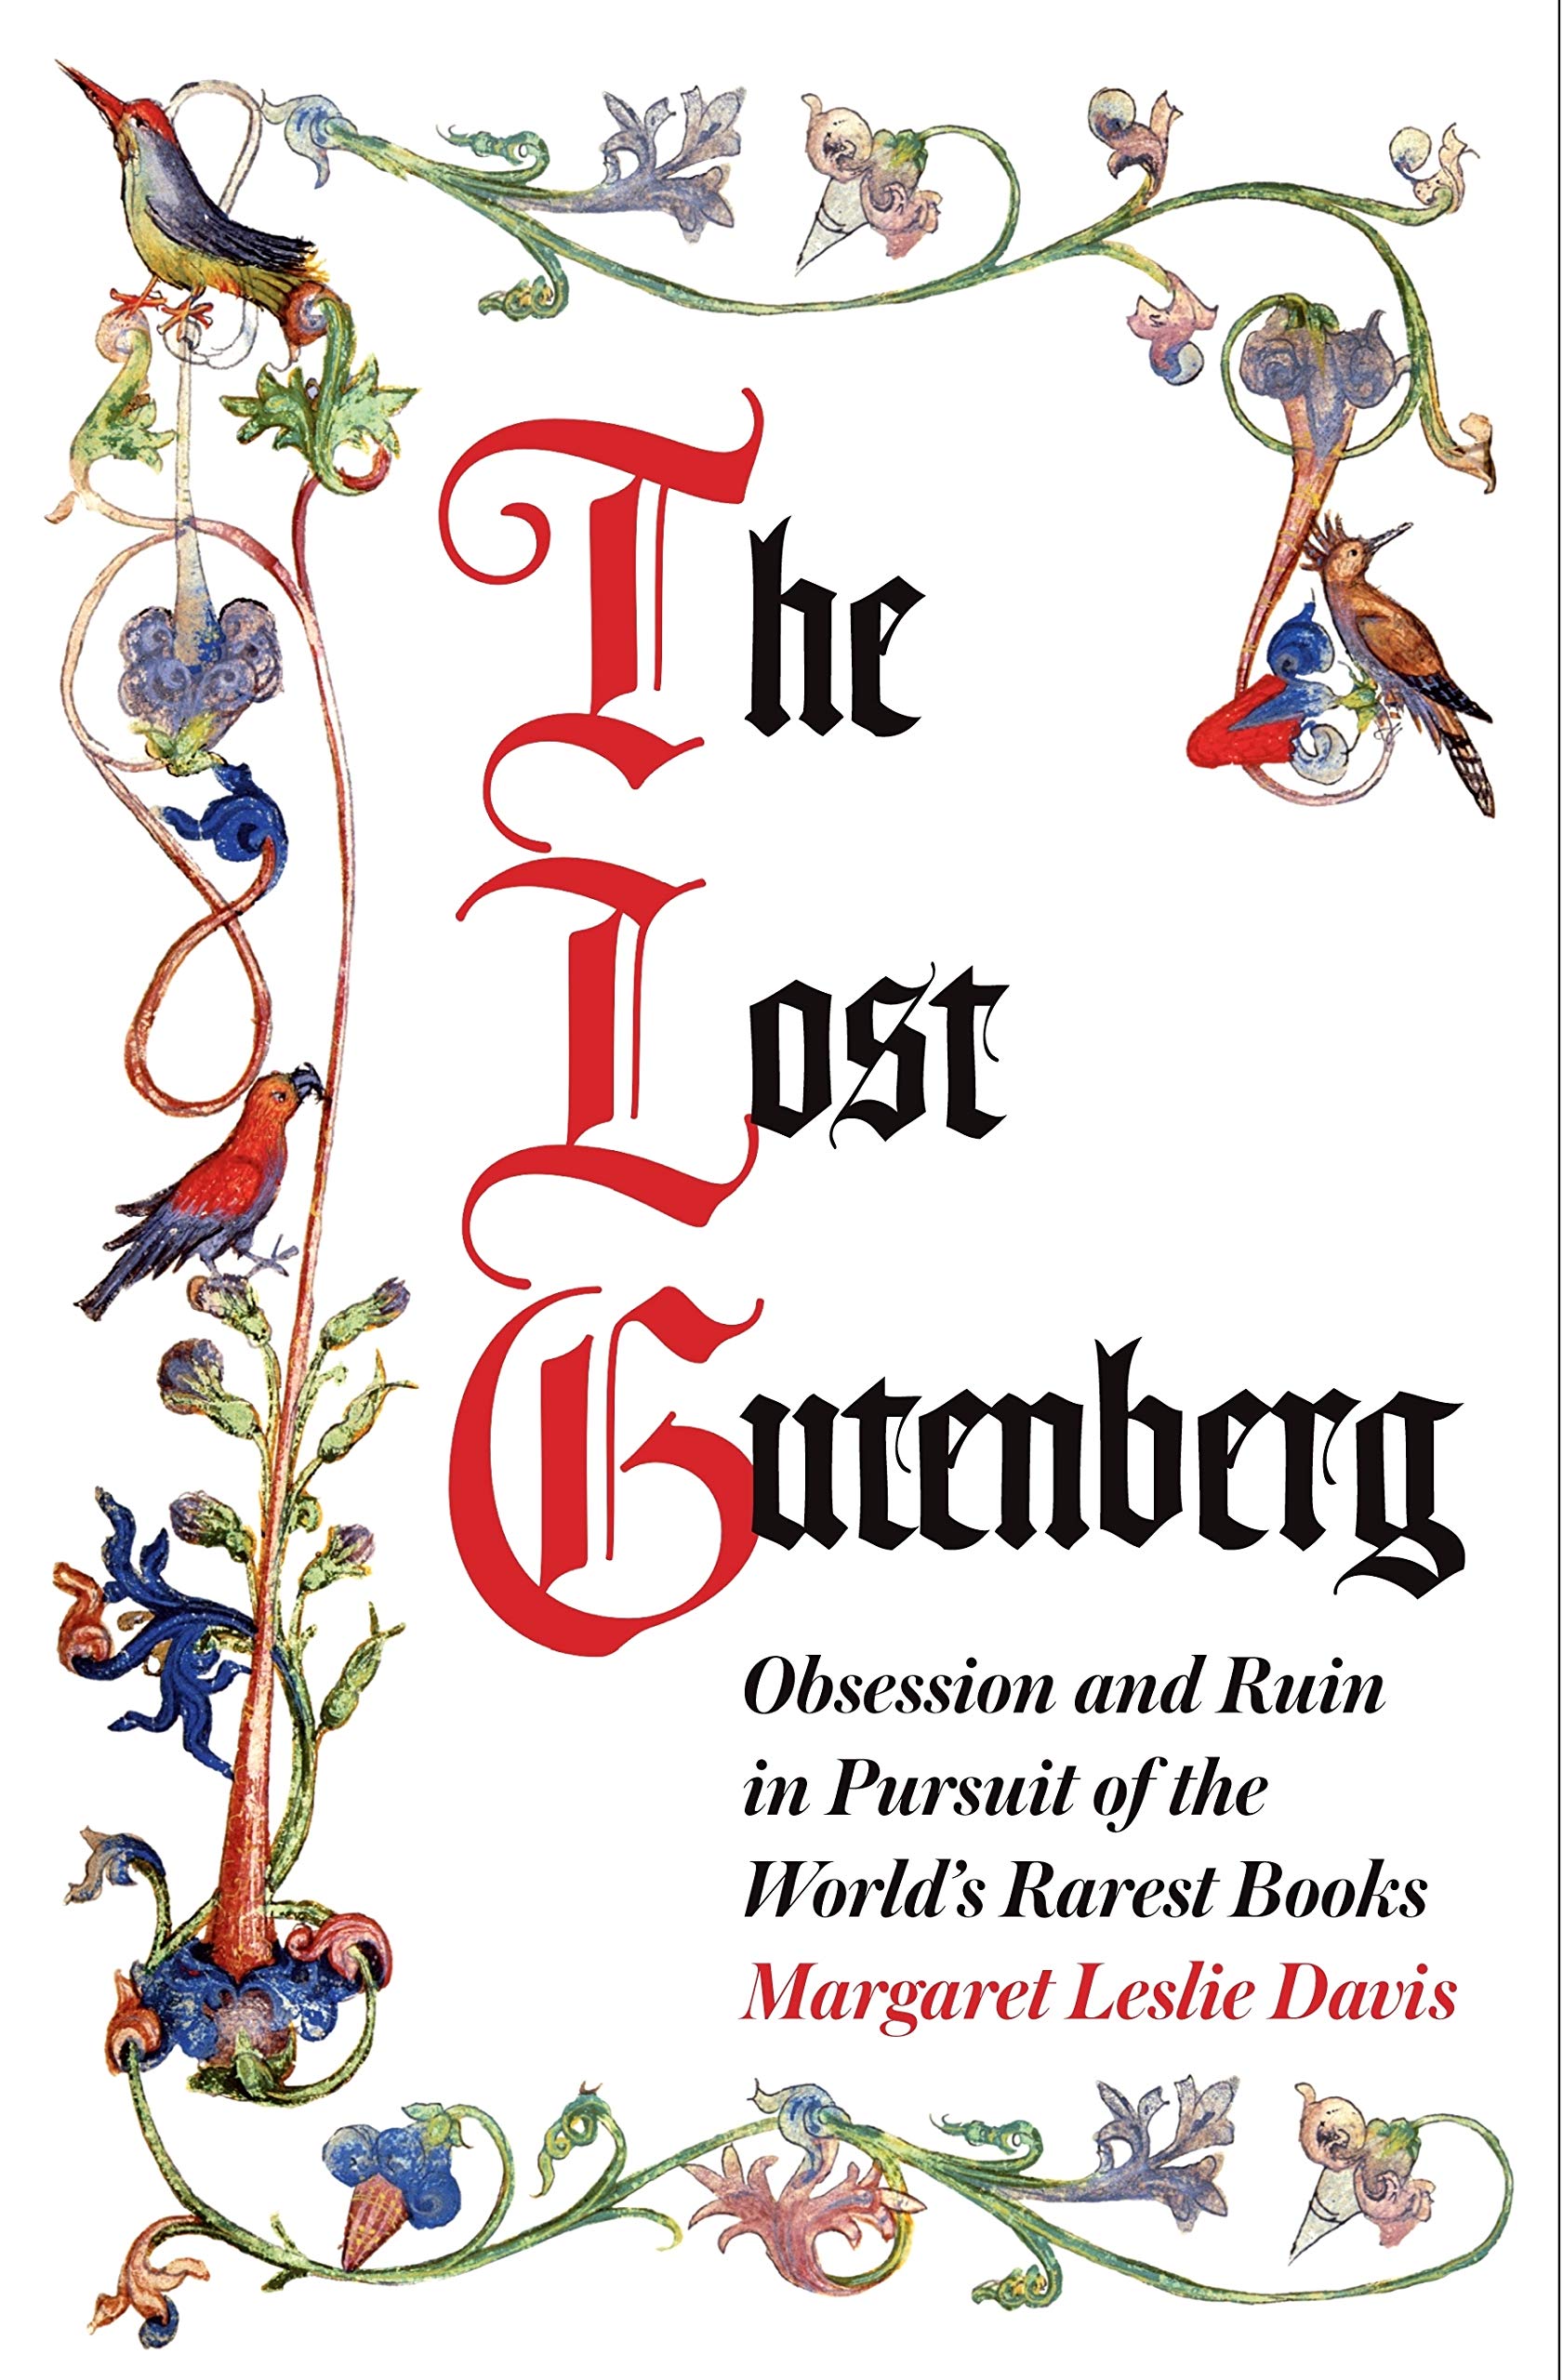 Lost Gutenberg | Margaret Leslie Davis